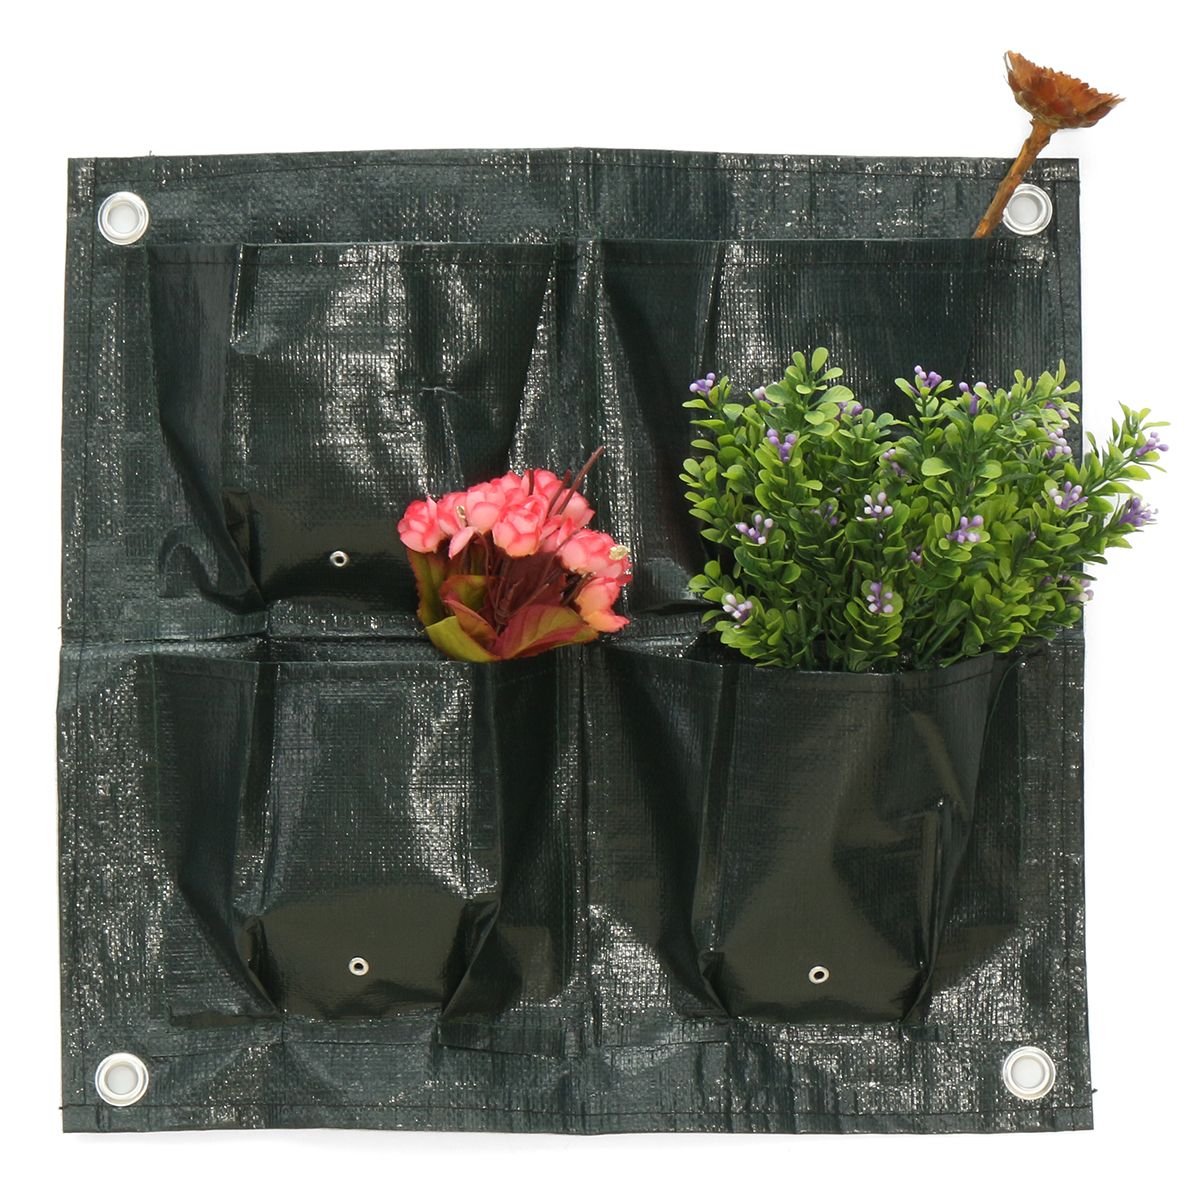 4-Pockets-Home-Garden-Balcony-Plant-Bags-Hanging-Flower-Pot-PE-Planting-Grow-Bag-1254017